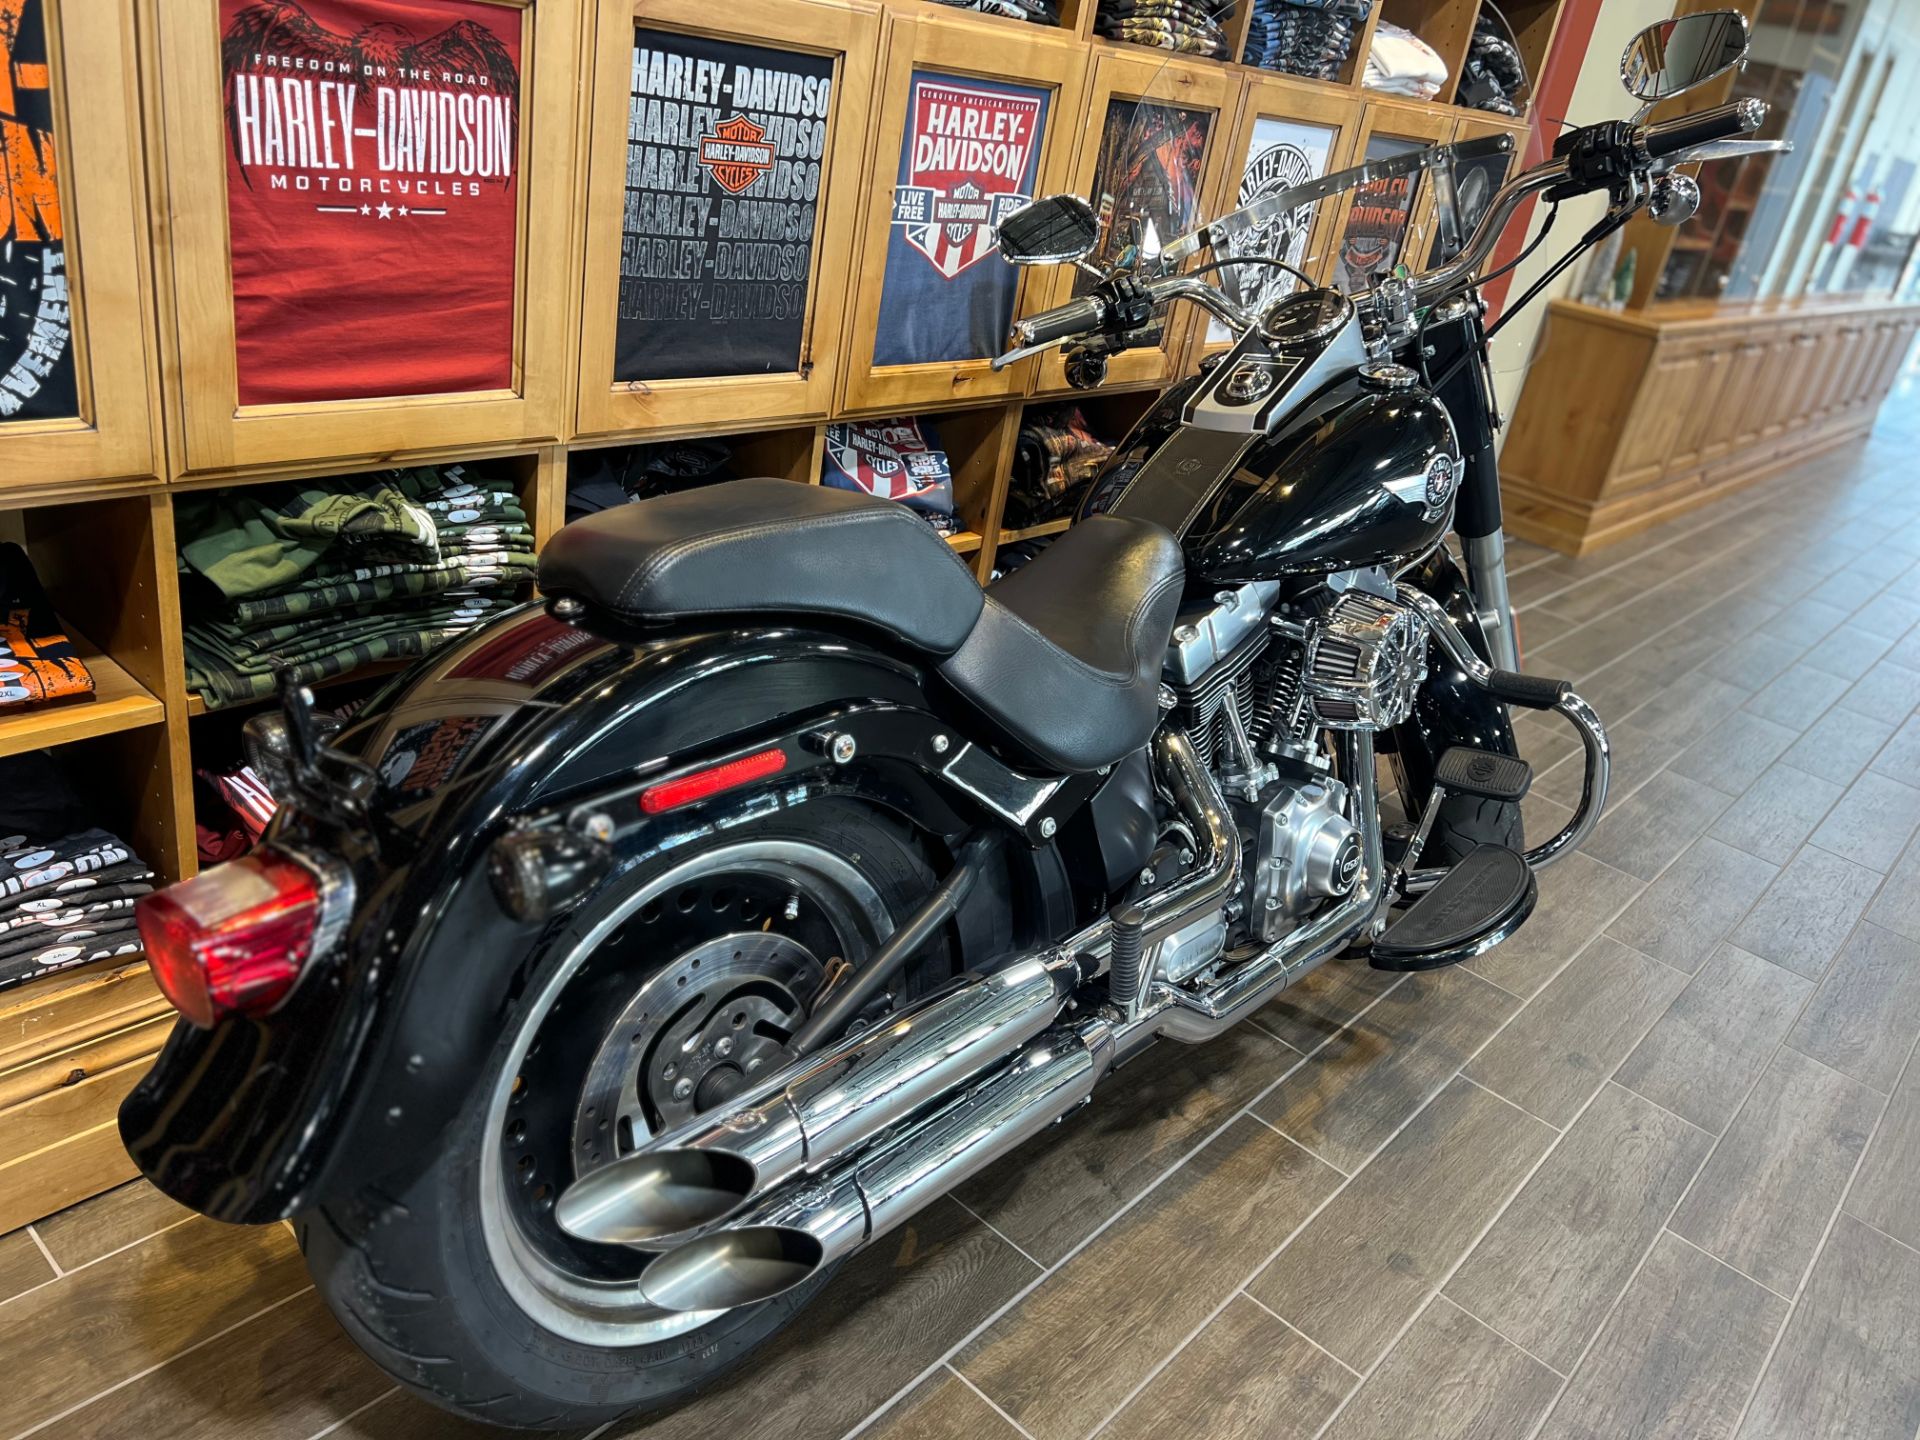 2014 Harley-Davidson Fat Boy® Lo in Logan, Utah - Photo 3